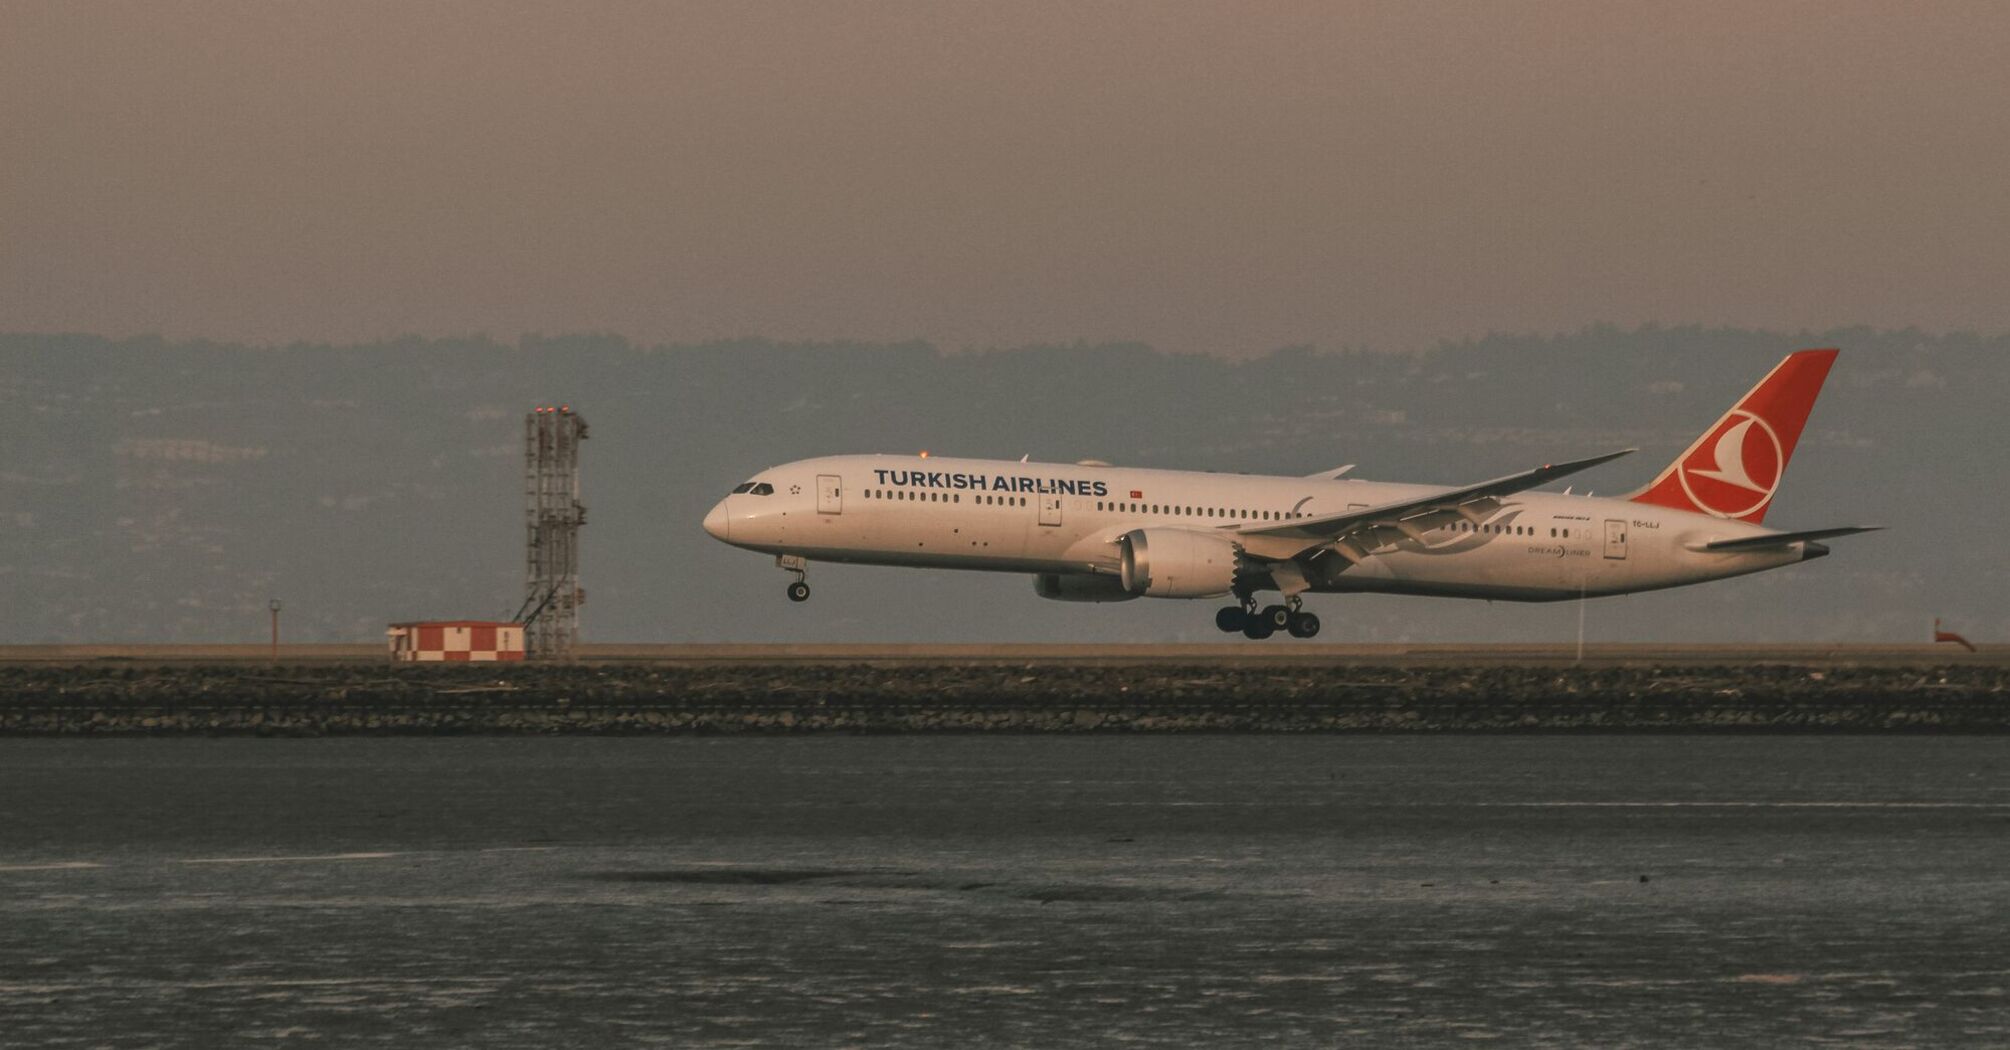 Turkish Airlines plane landing at SFO